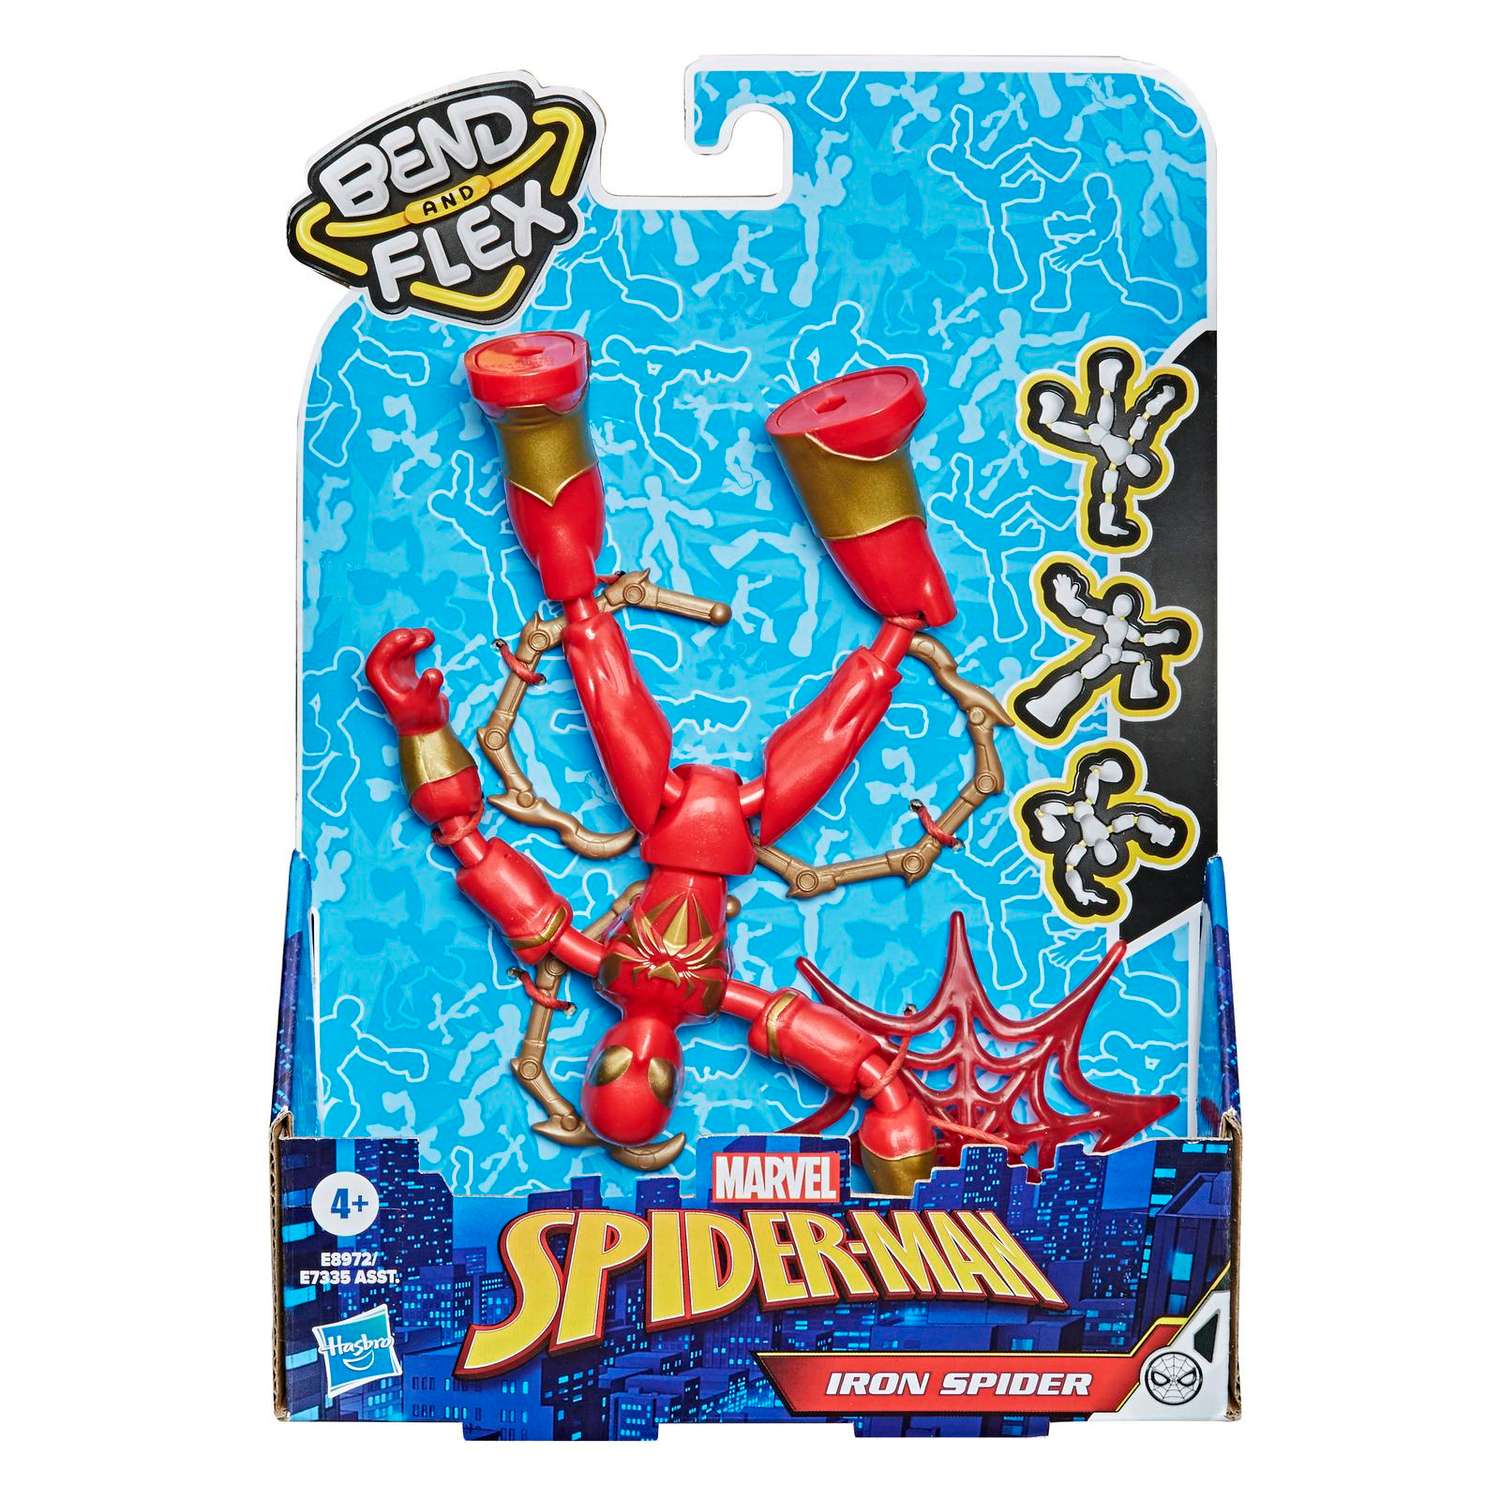 Игршука Человек-Паук (Spider-man) (SM) Бенди Человек-паук Костюм E89725X0 - фото 2